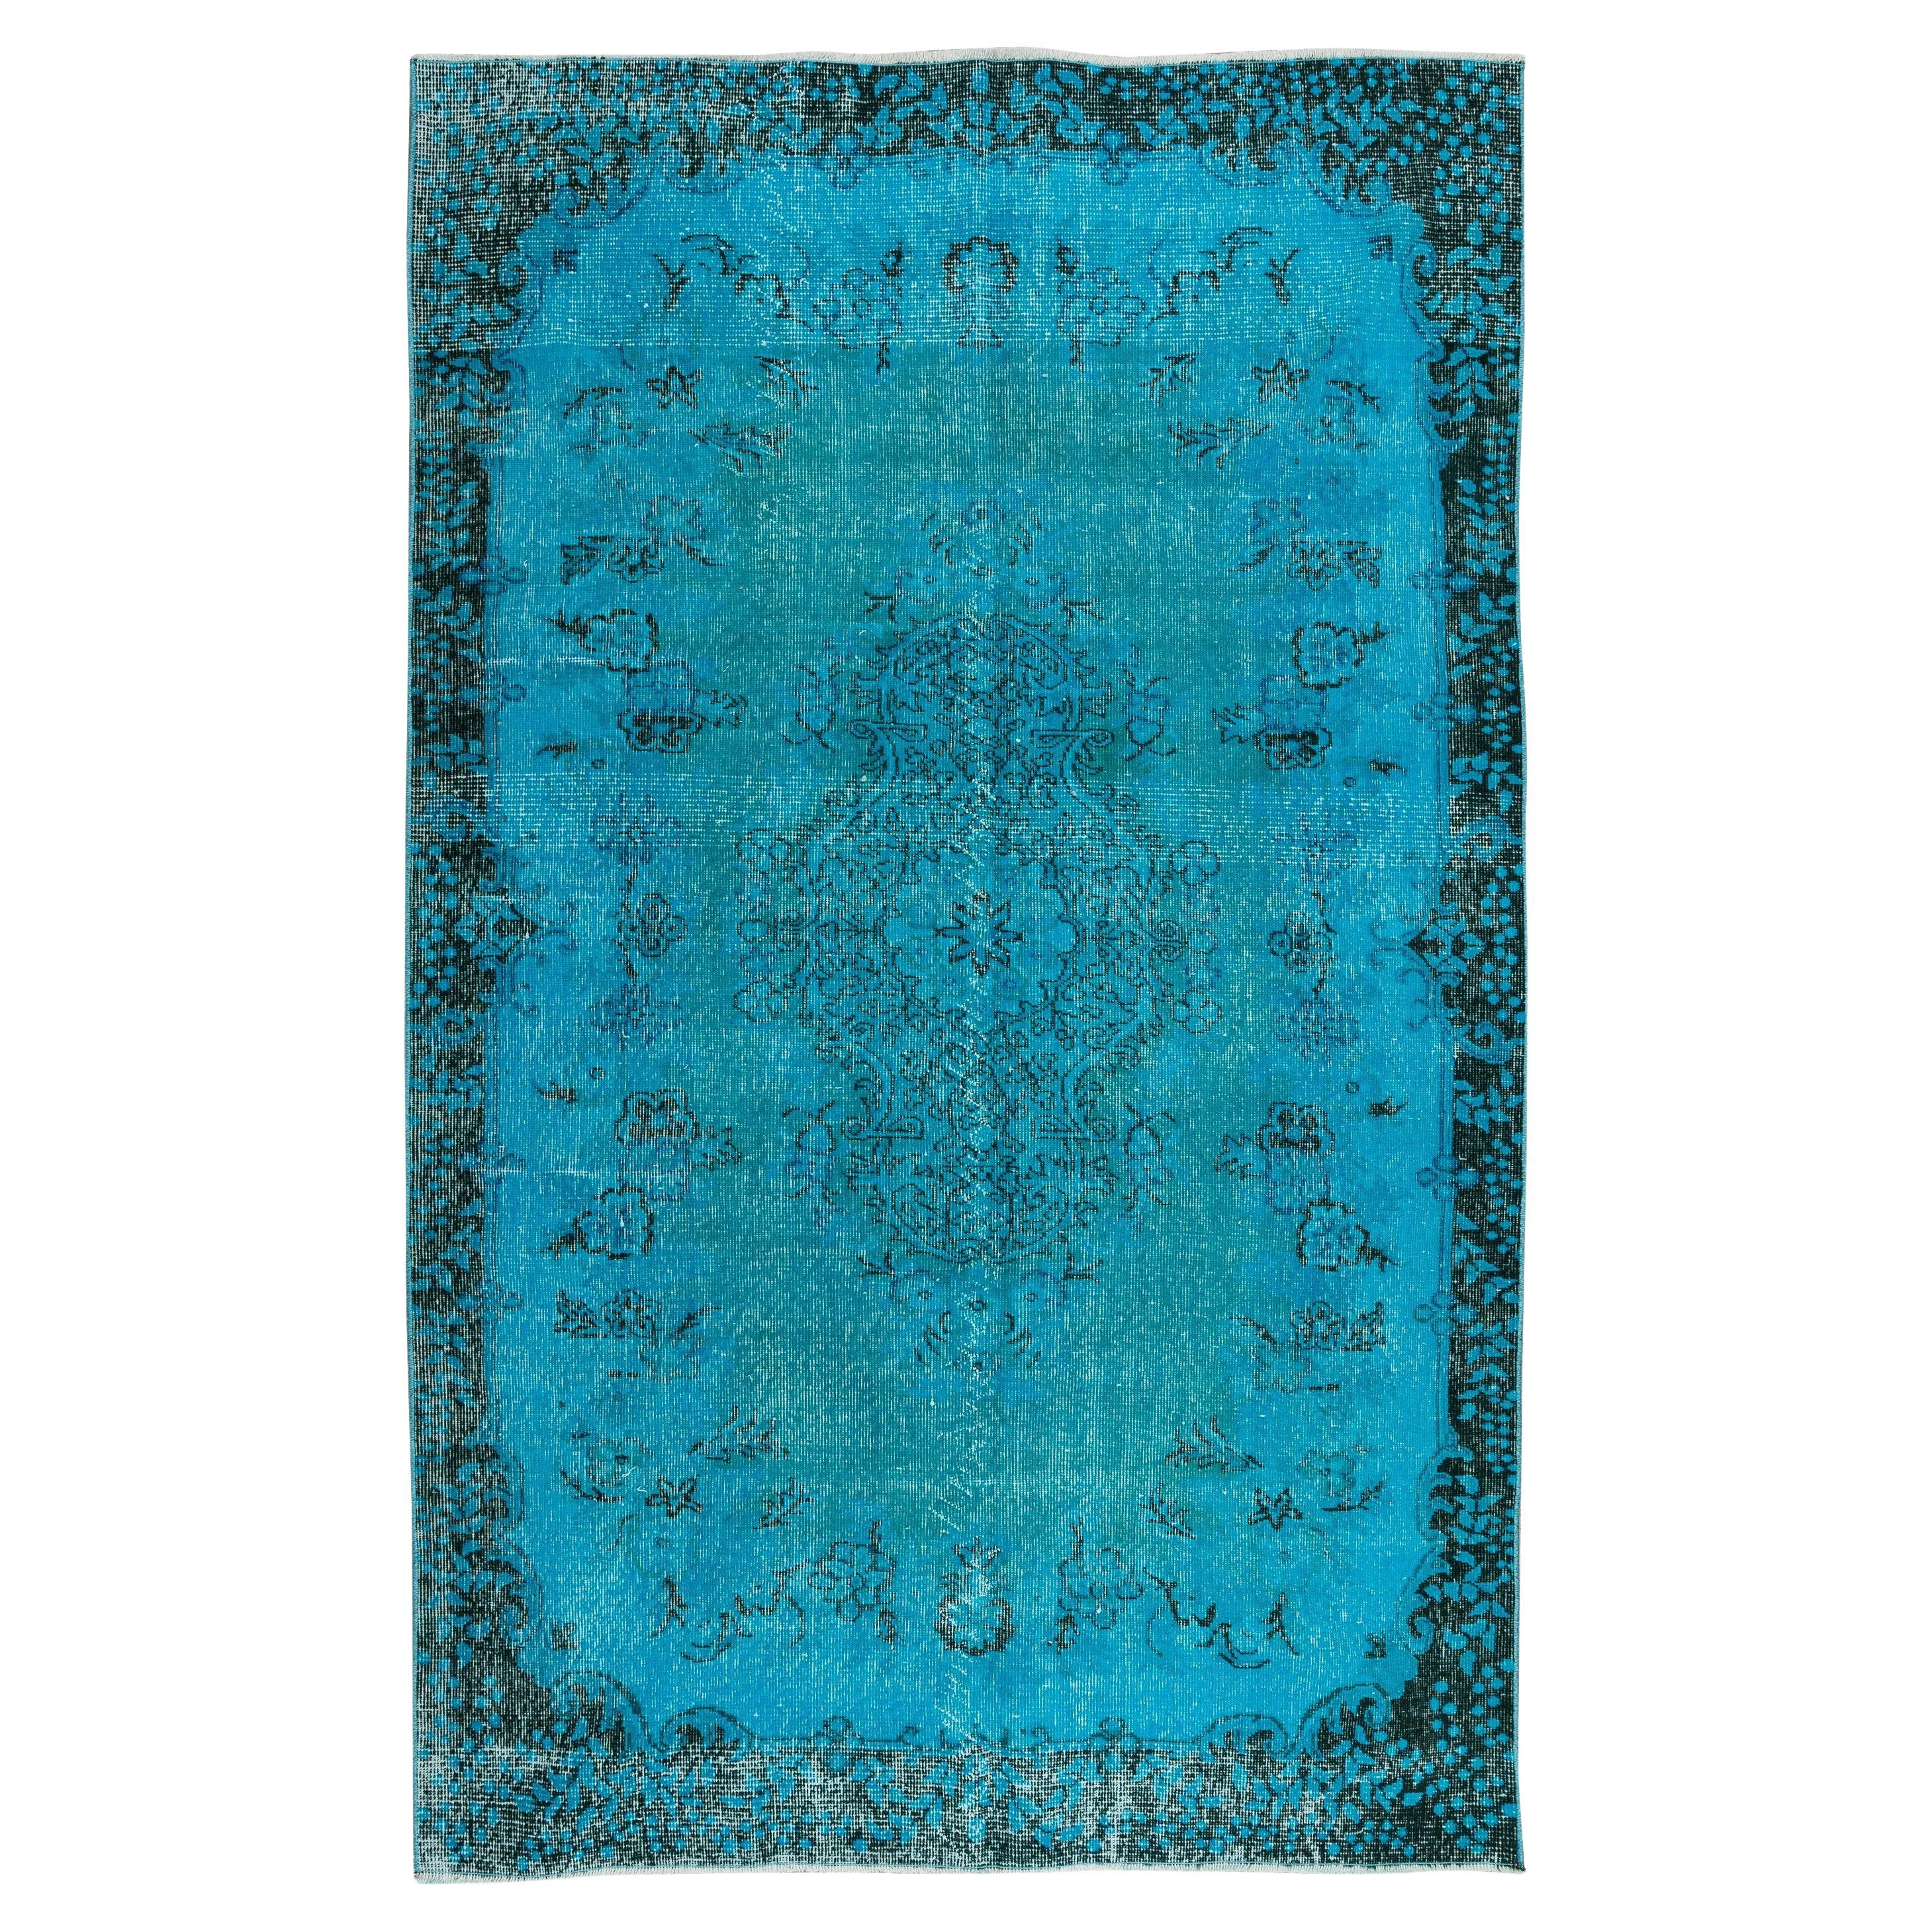 5.4x8.8 Ft Modern Handmade Area Rug. Vintage Turkish Carpet Over-Dyed in Teal For Sale